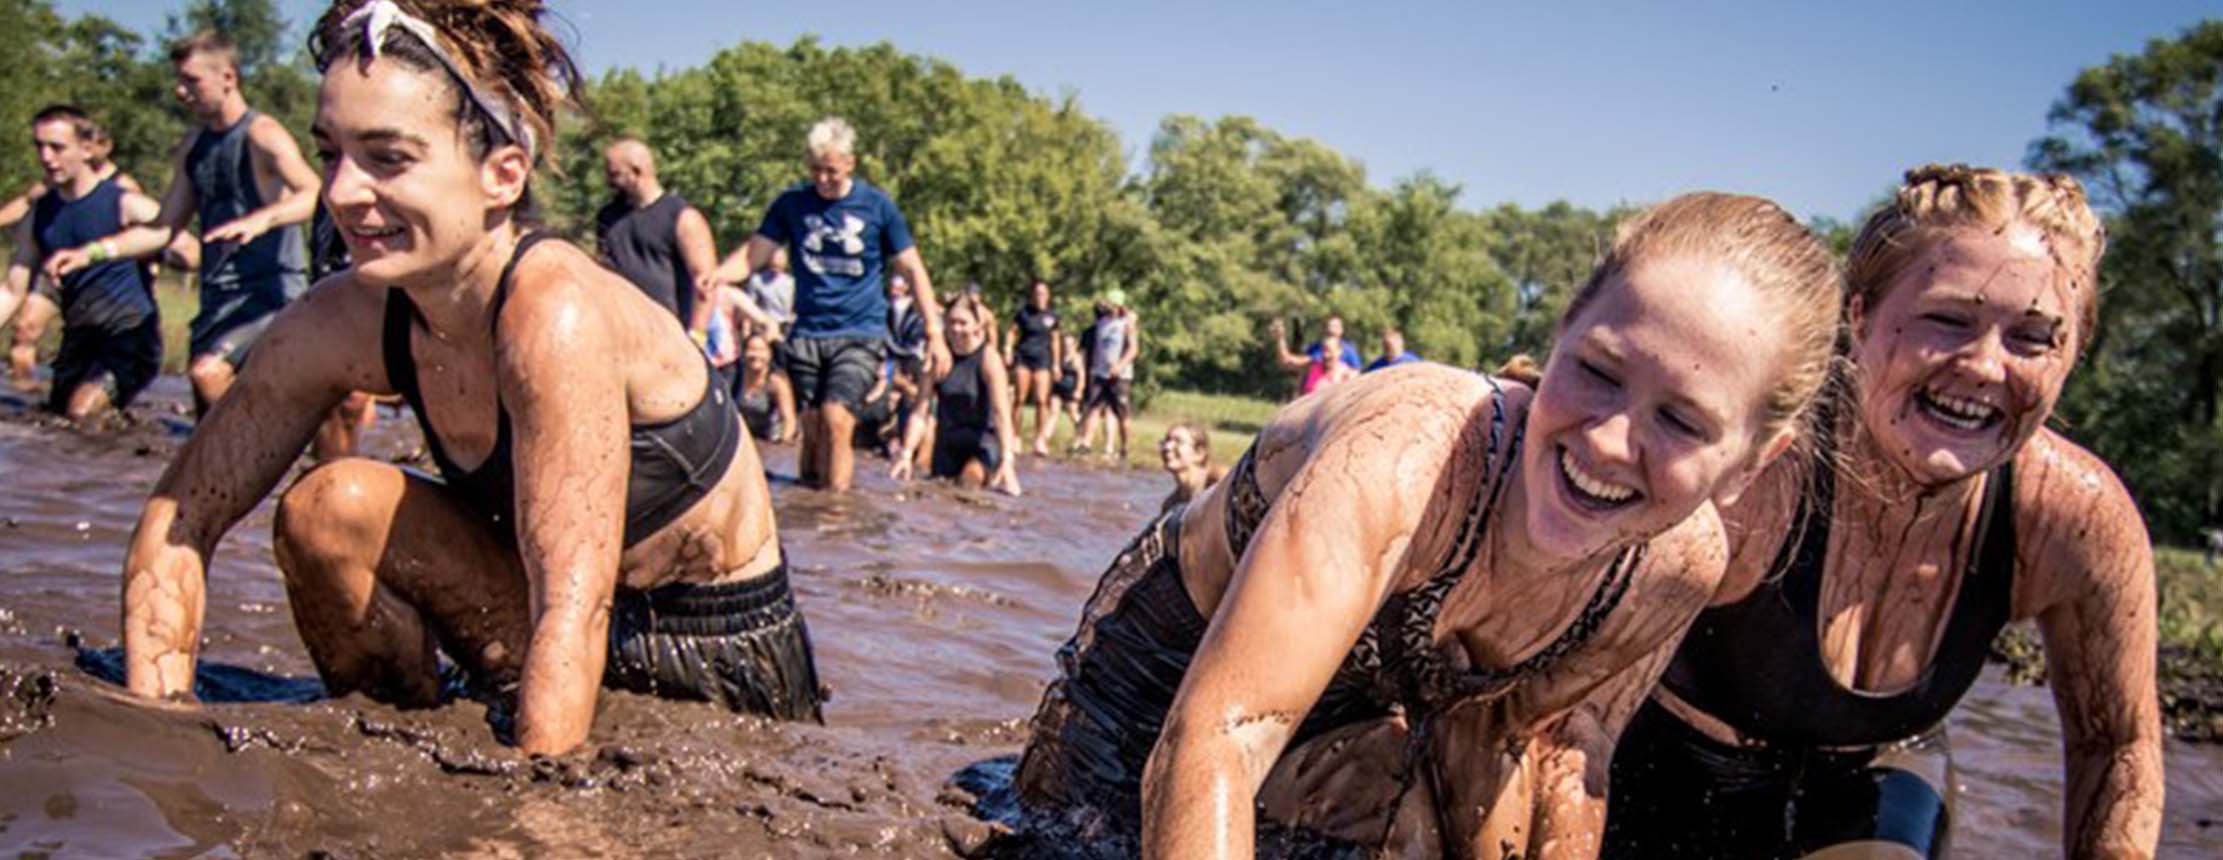 Tough mudder women fight their way through mud